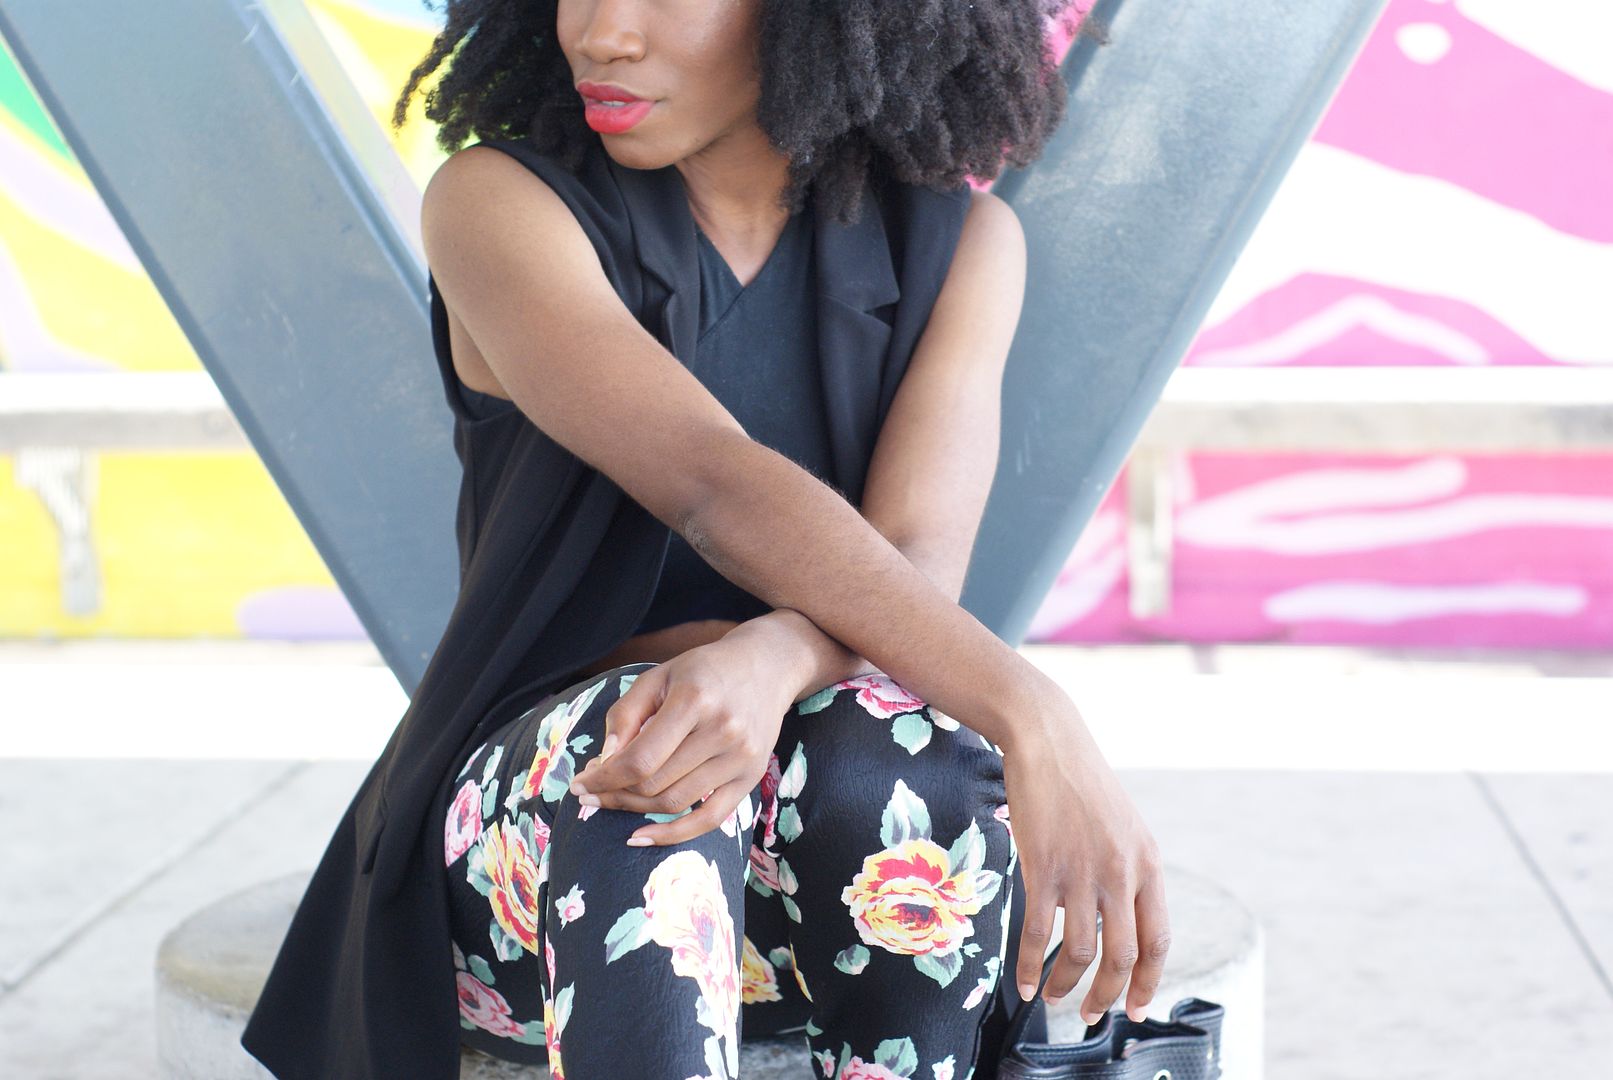 floral trousers ASOS, black vest, Toronto blogger